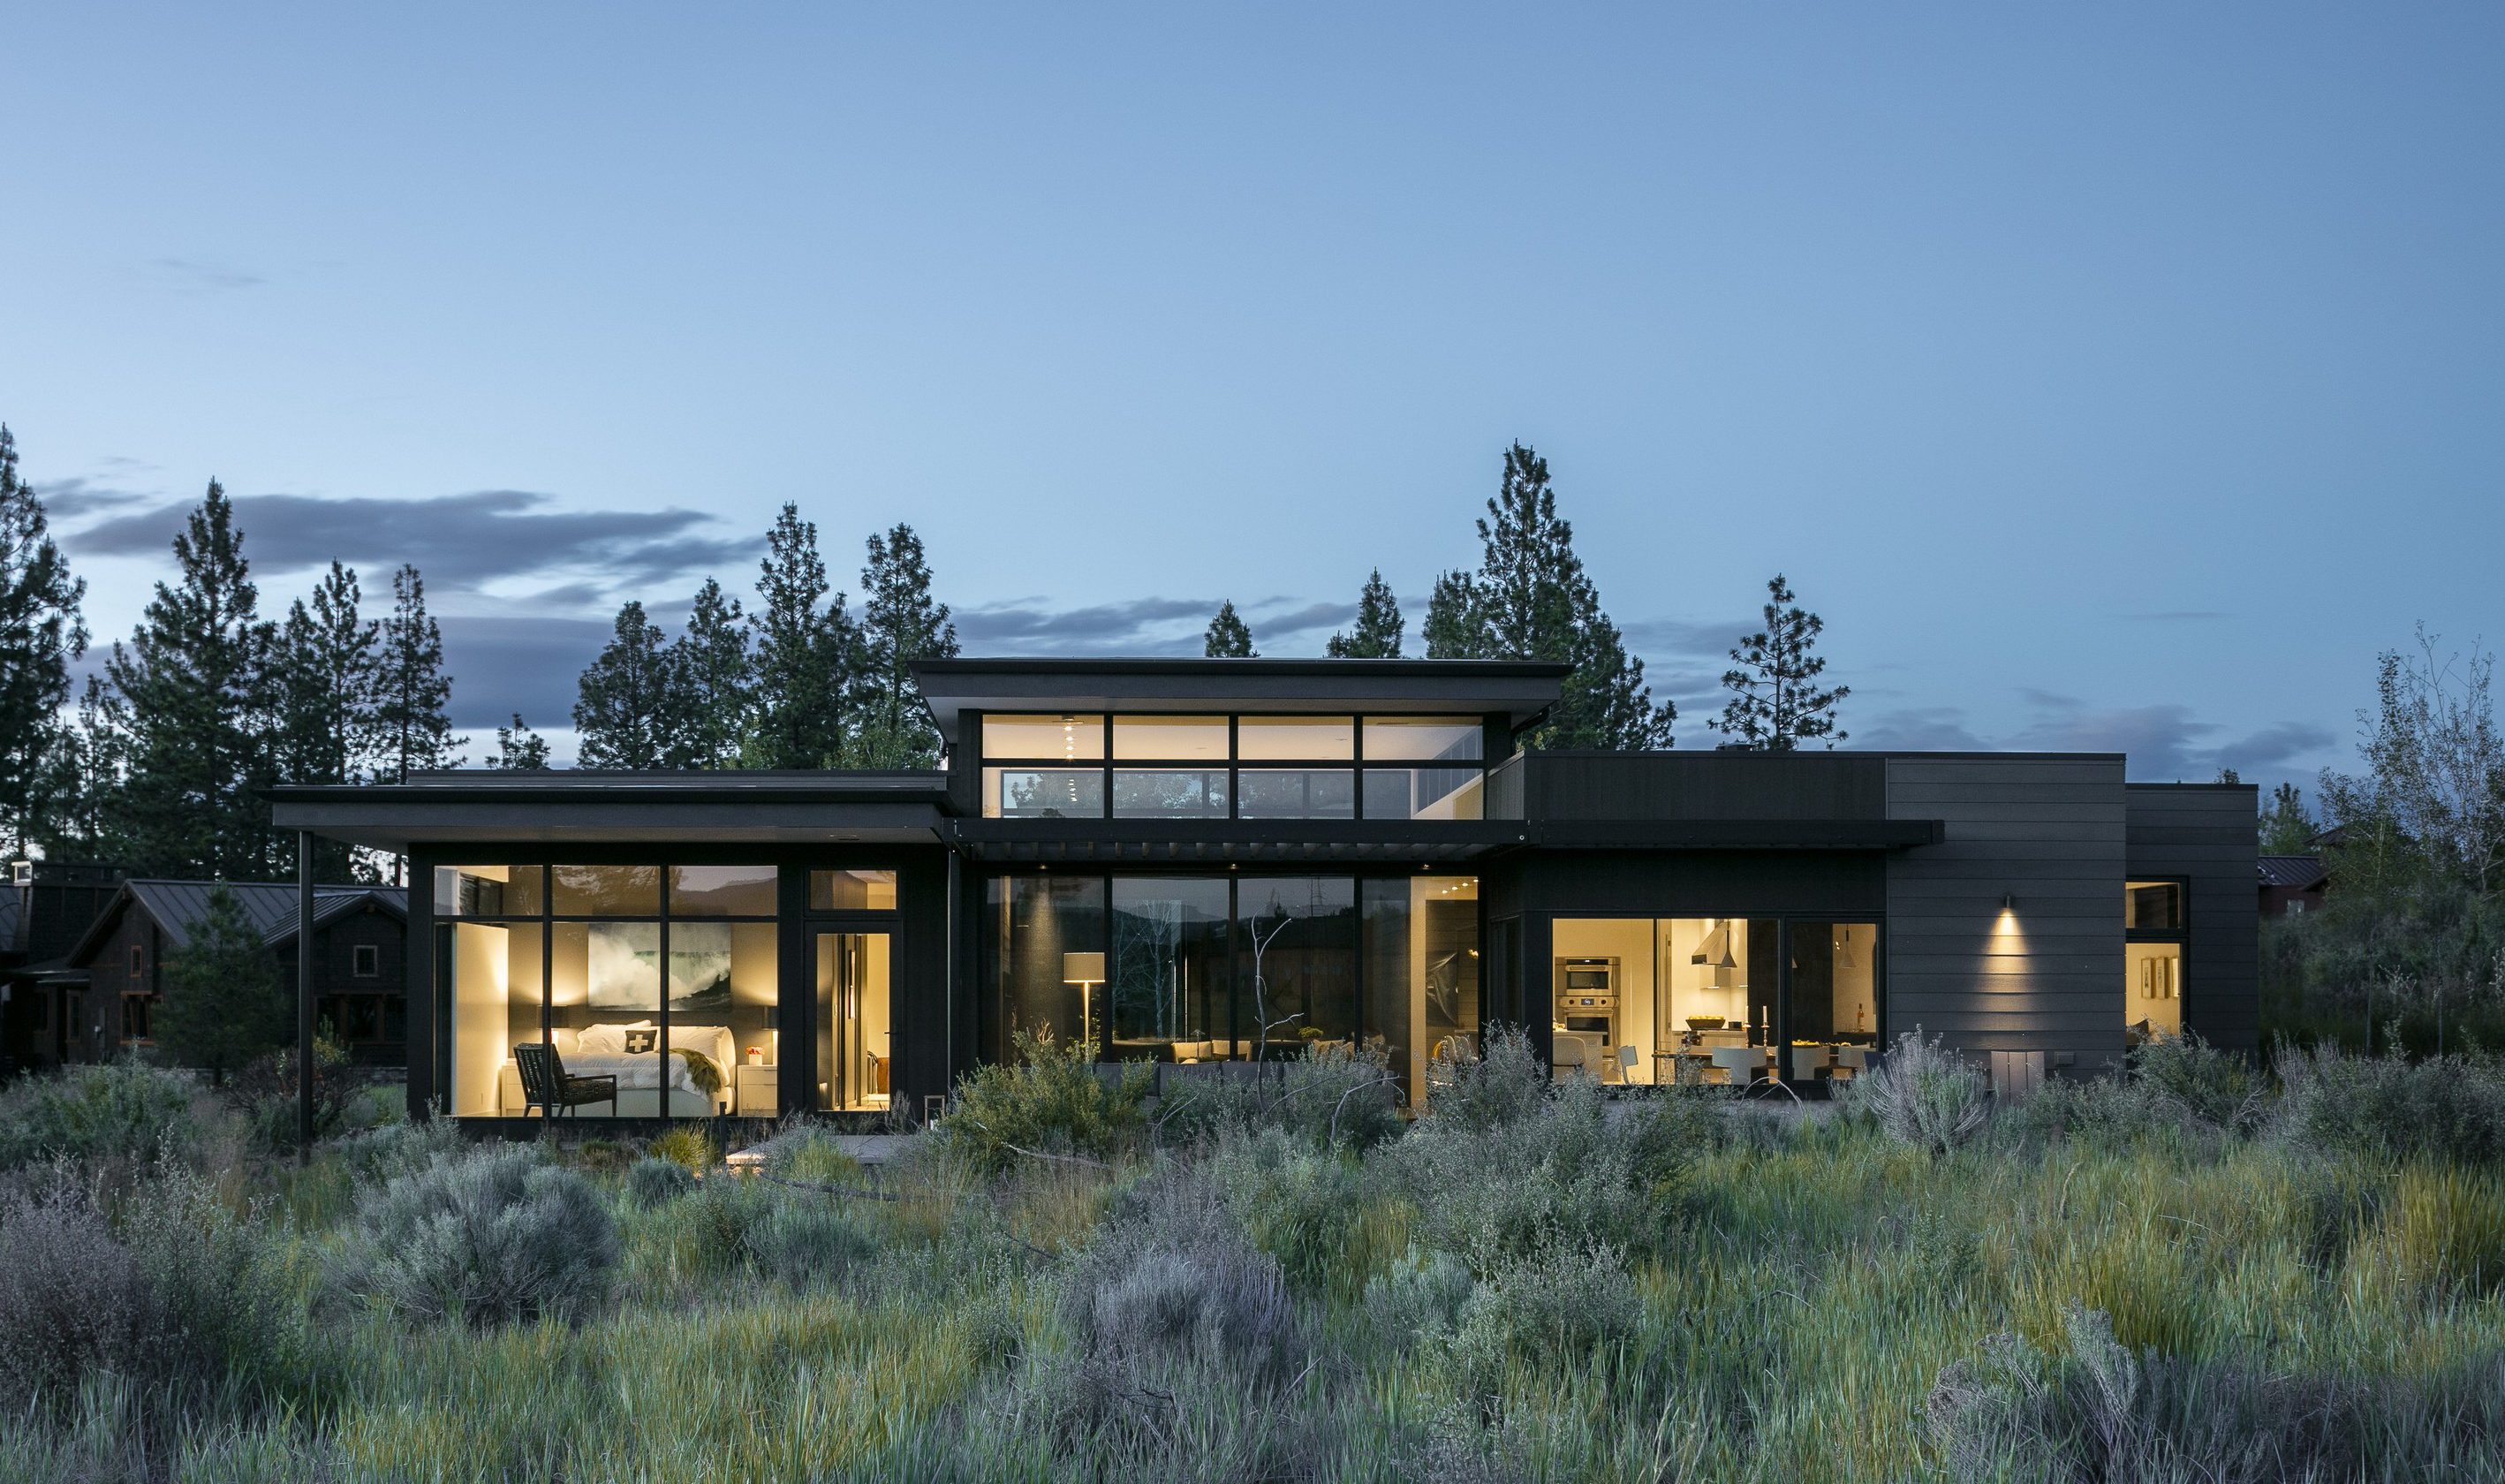 High Desert Modern – Home Built Like a Swiss Army Knife